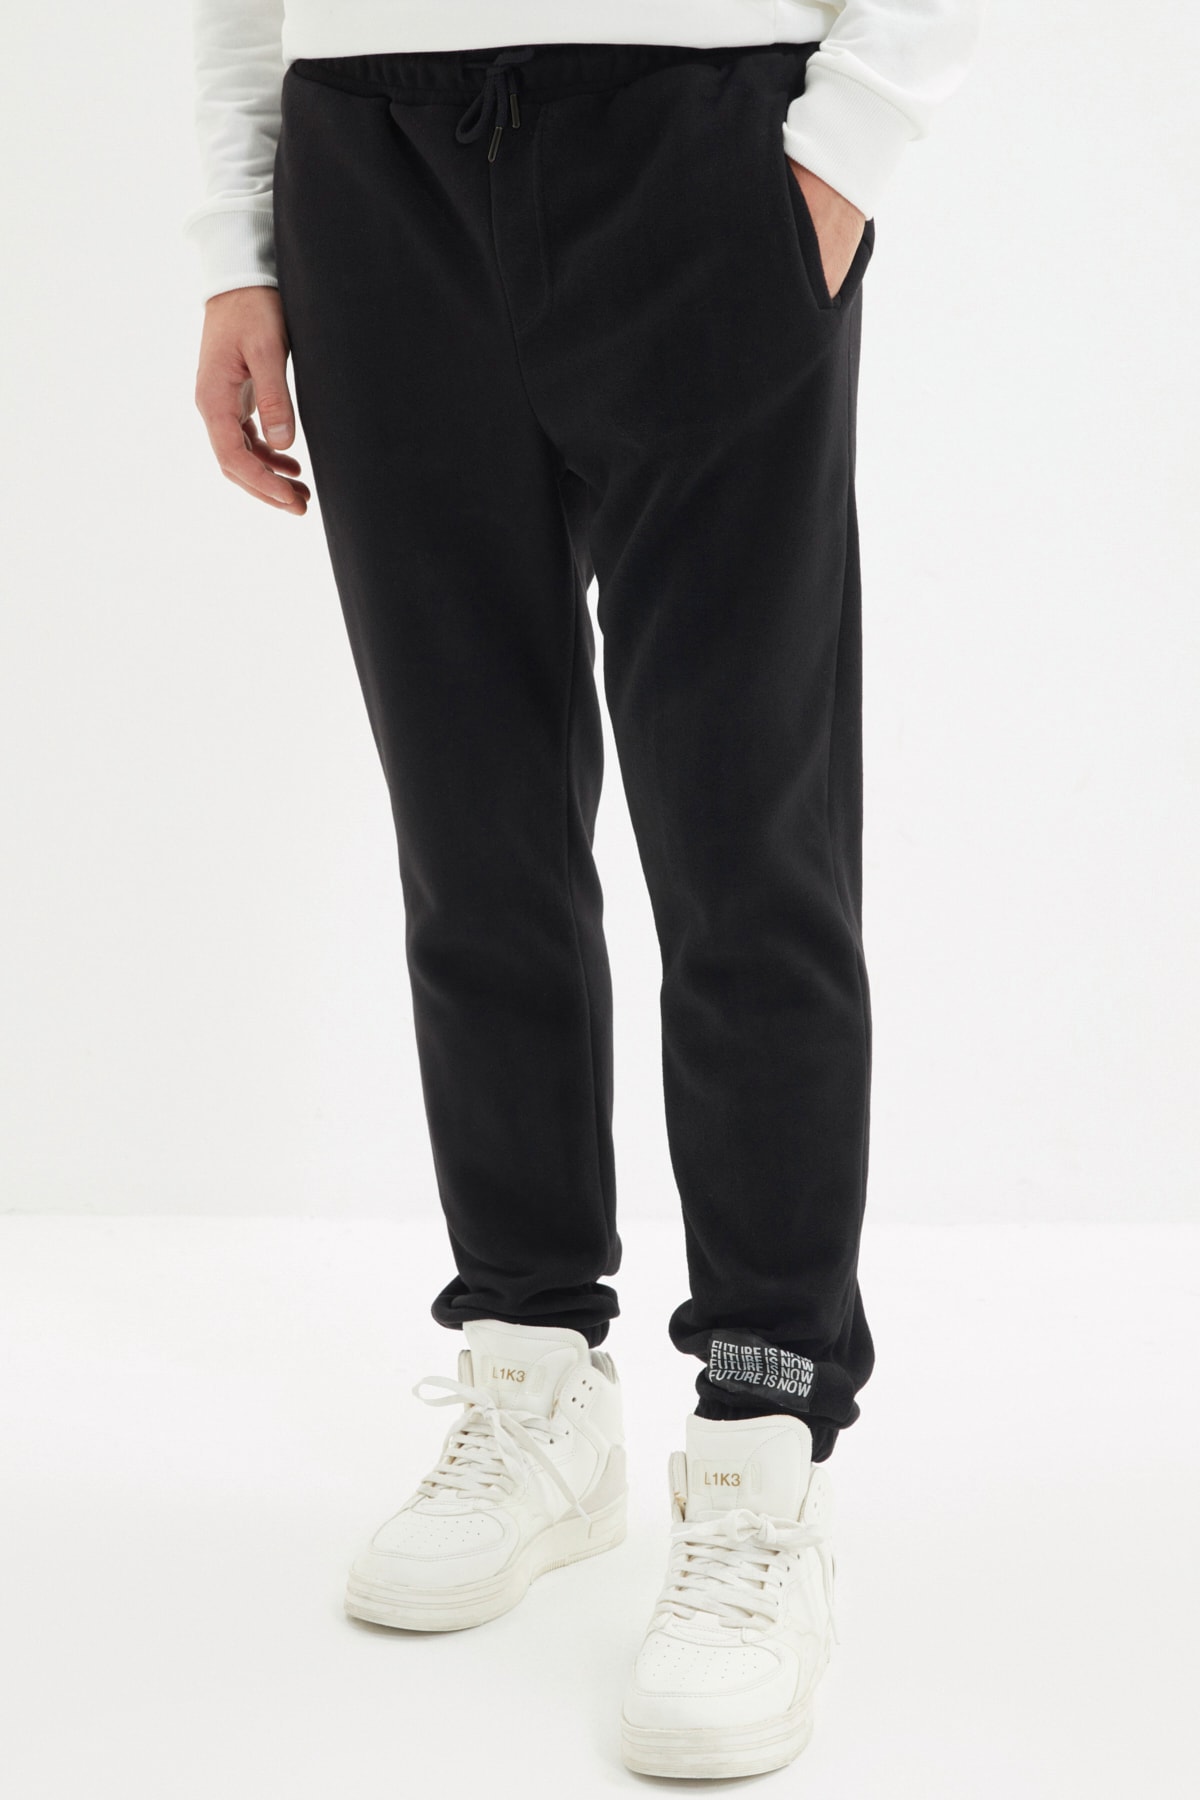 Trendyol Black Men's Regular/Regular Fit Rubber Legs Label Appliqués Fleece Warm Trousers.